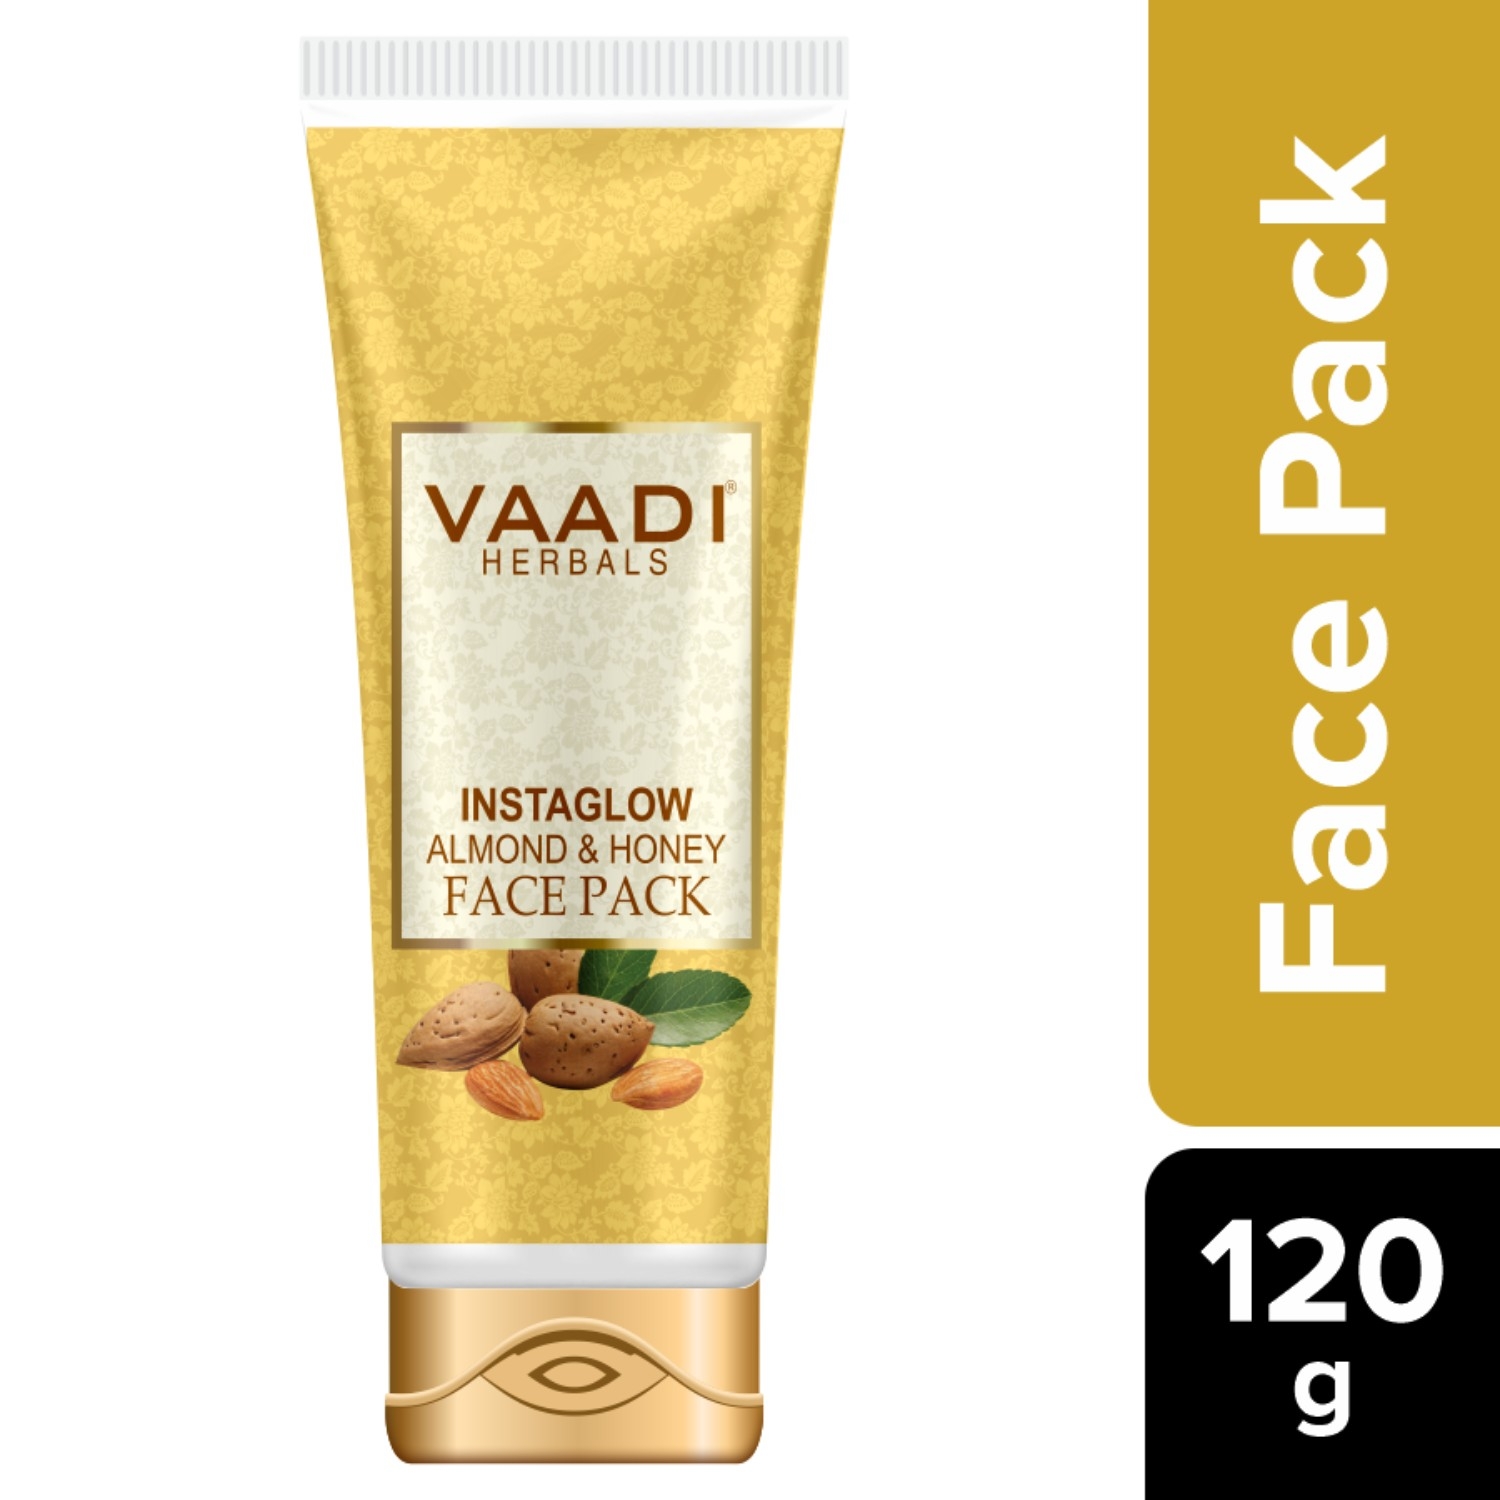 Vaadi Herbals | Vaadi Herbals Instaglow Almond and Honey Face Pack (120g)